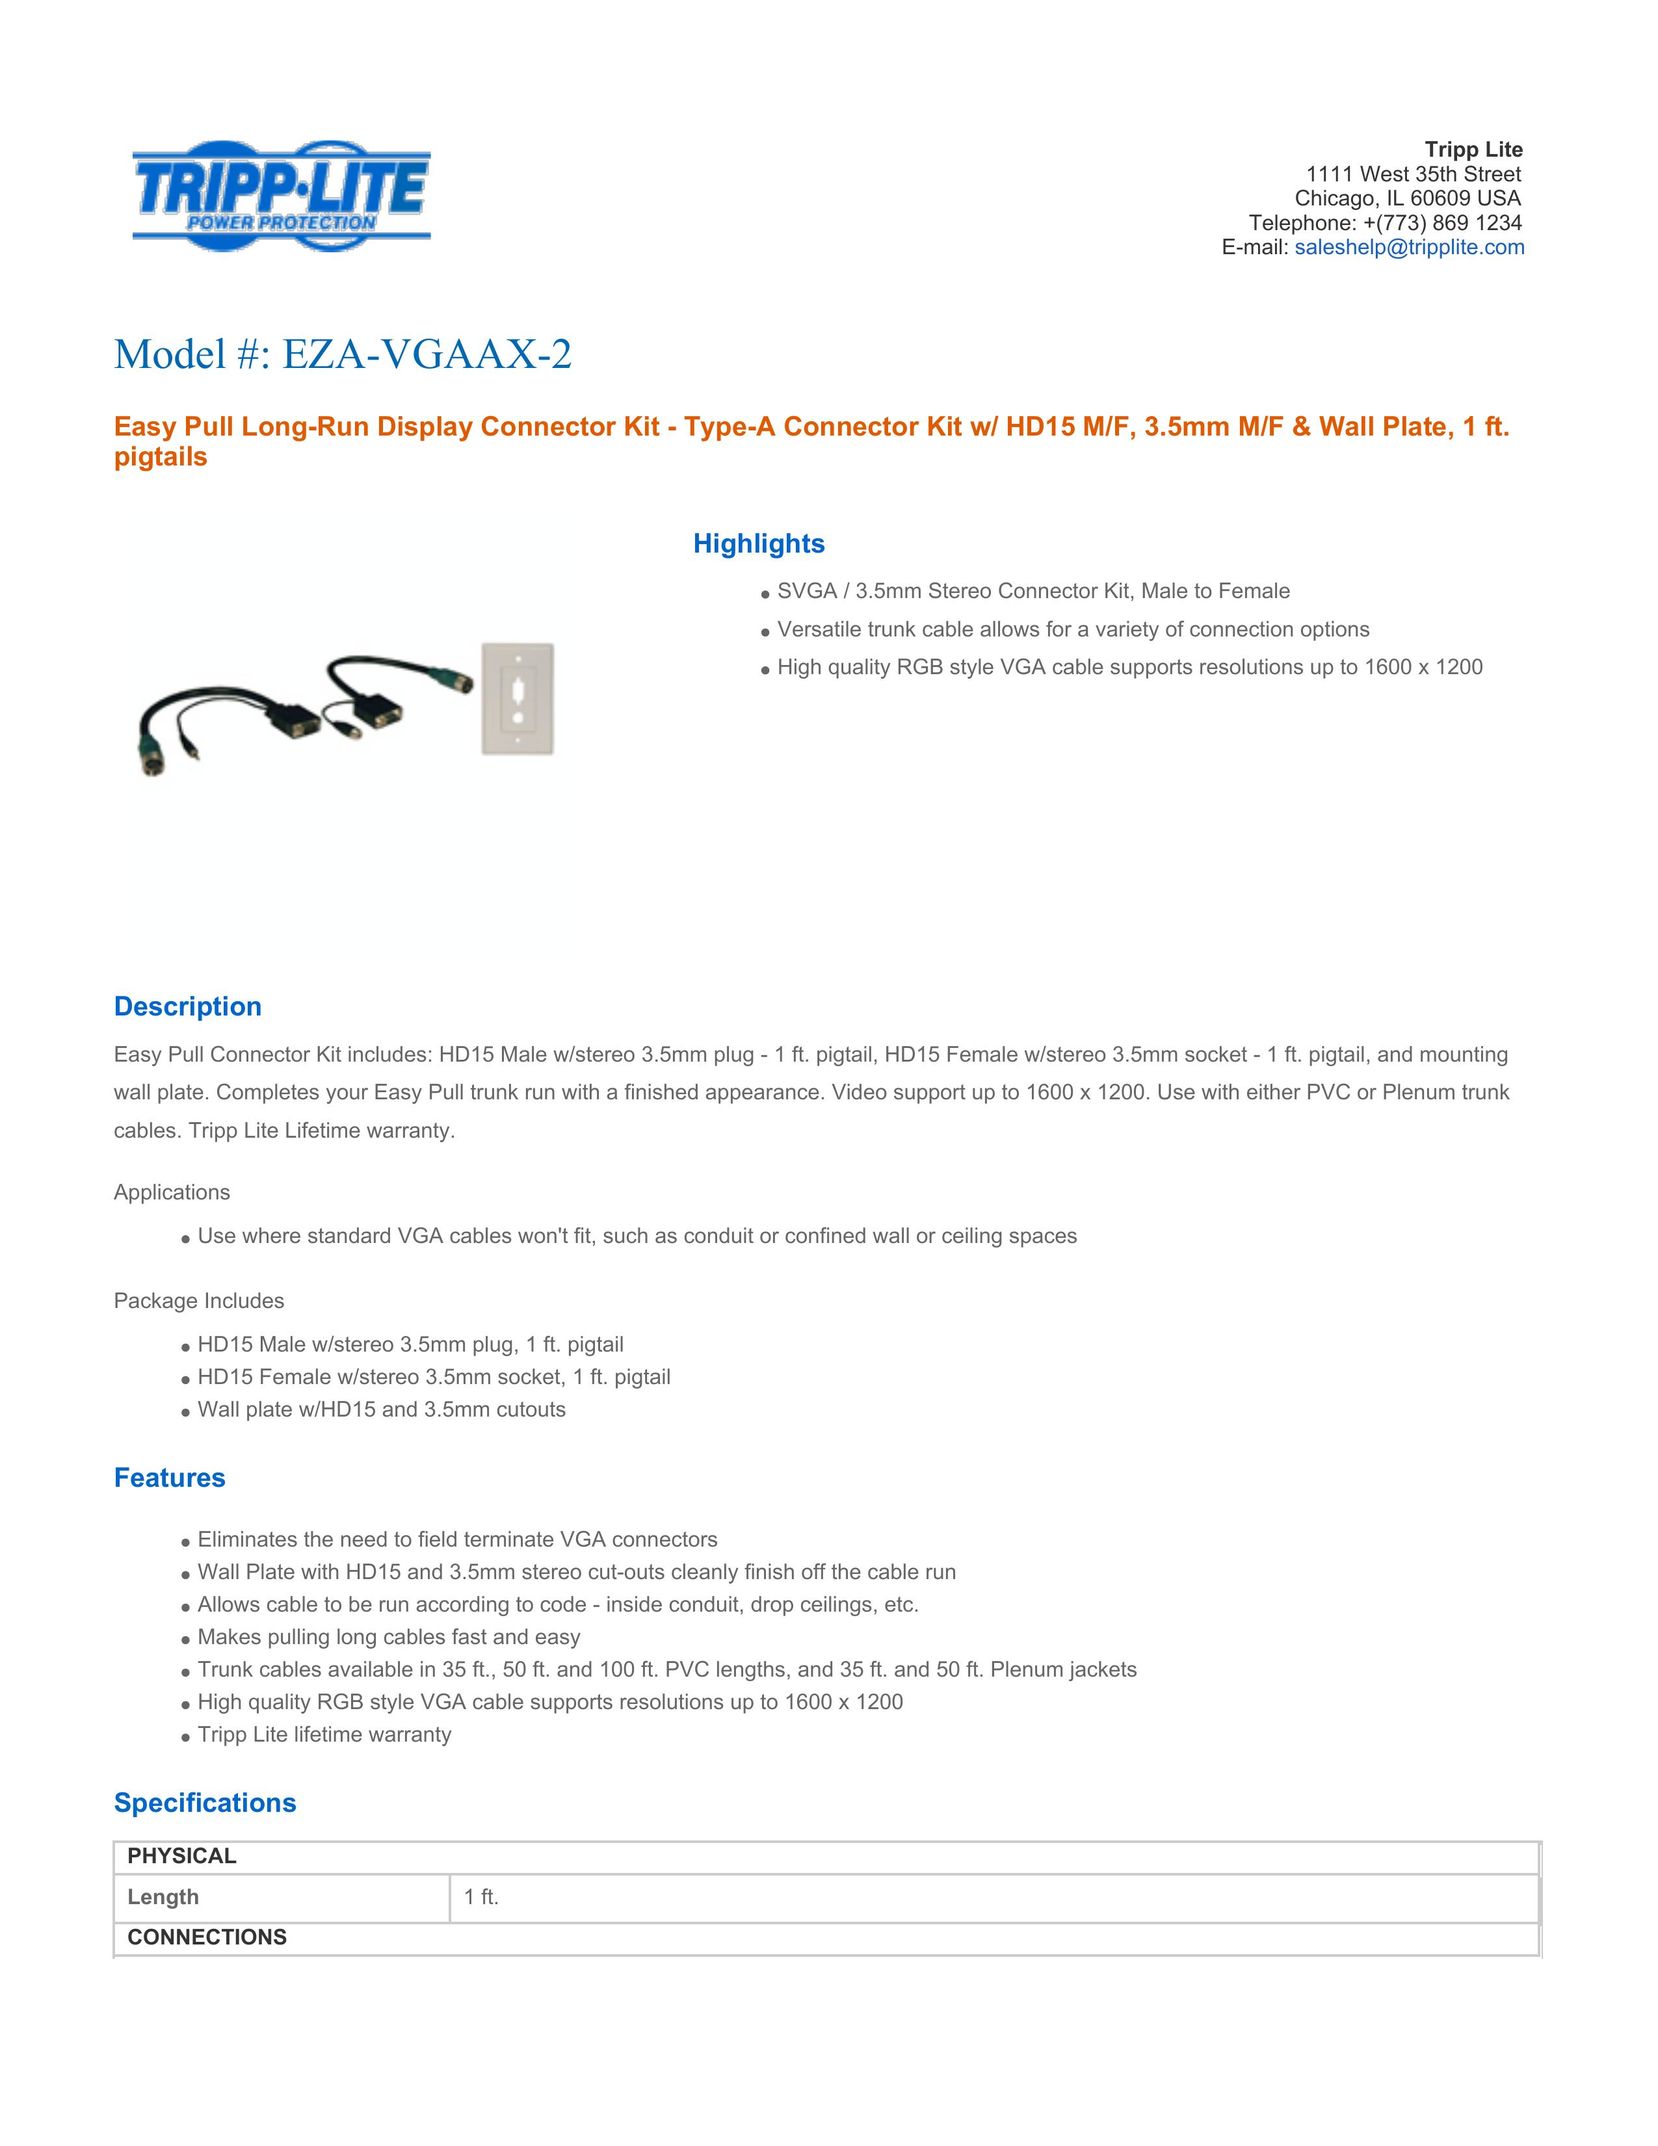 Tripp Lite EZA-VGAAX-2 Network Cables User Manual